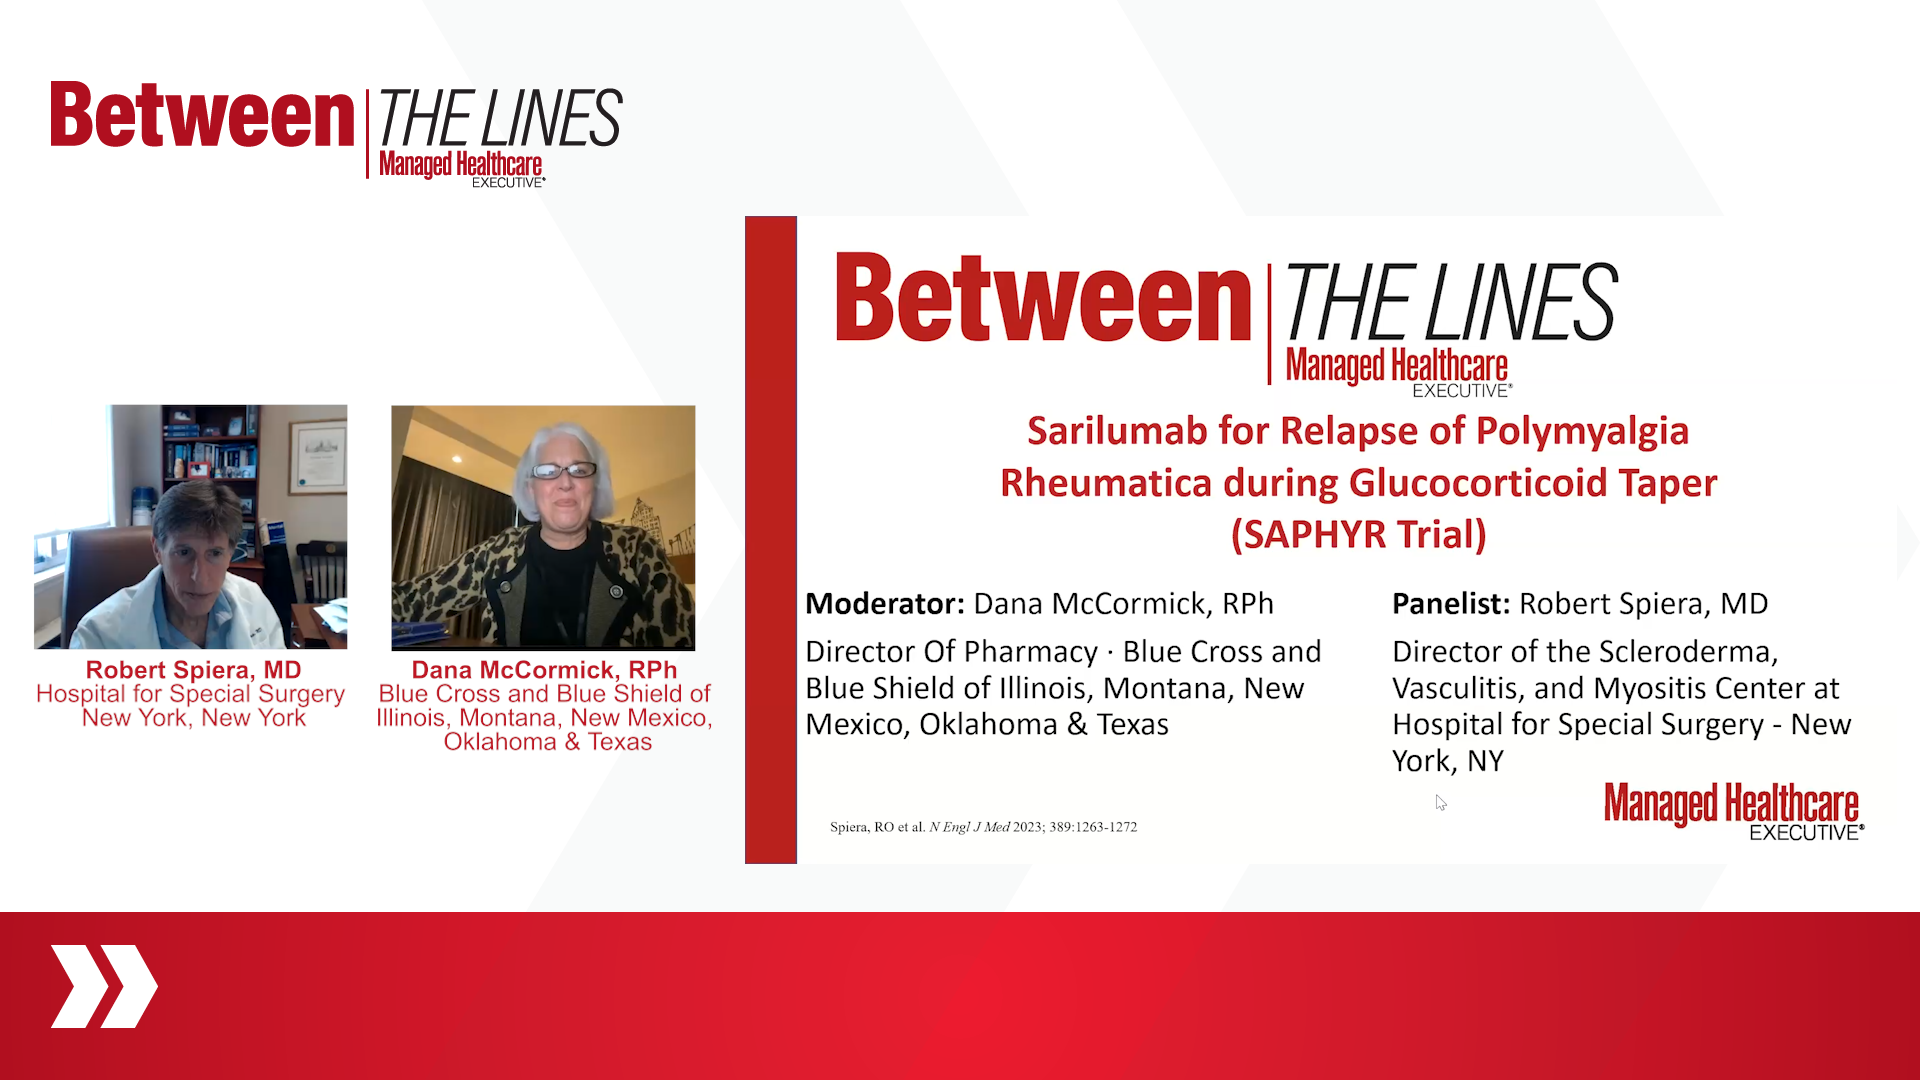 How the SAPHYR Trial Has Impacted Rheumatology Care